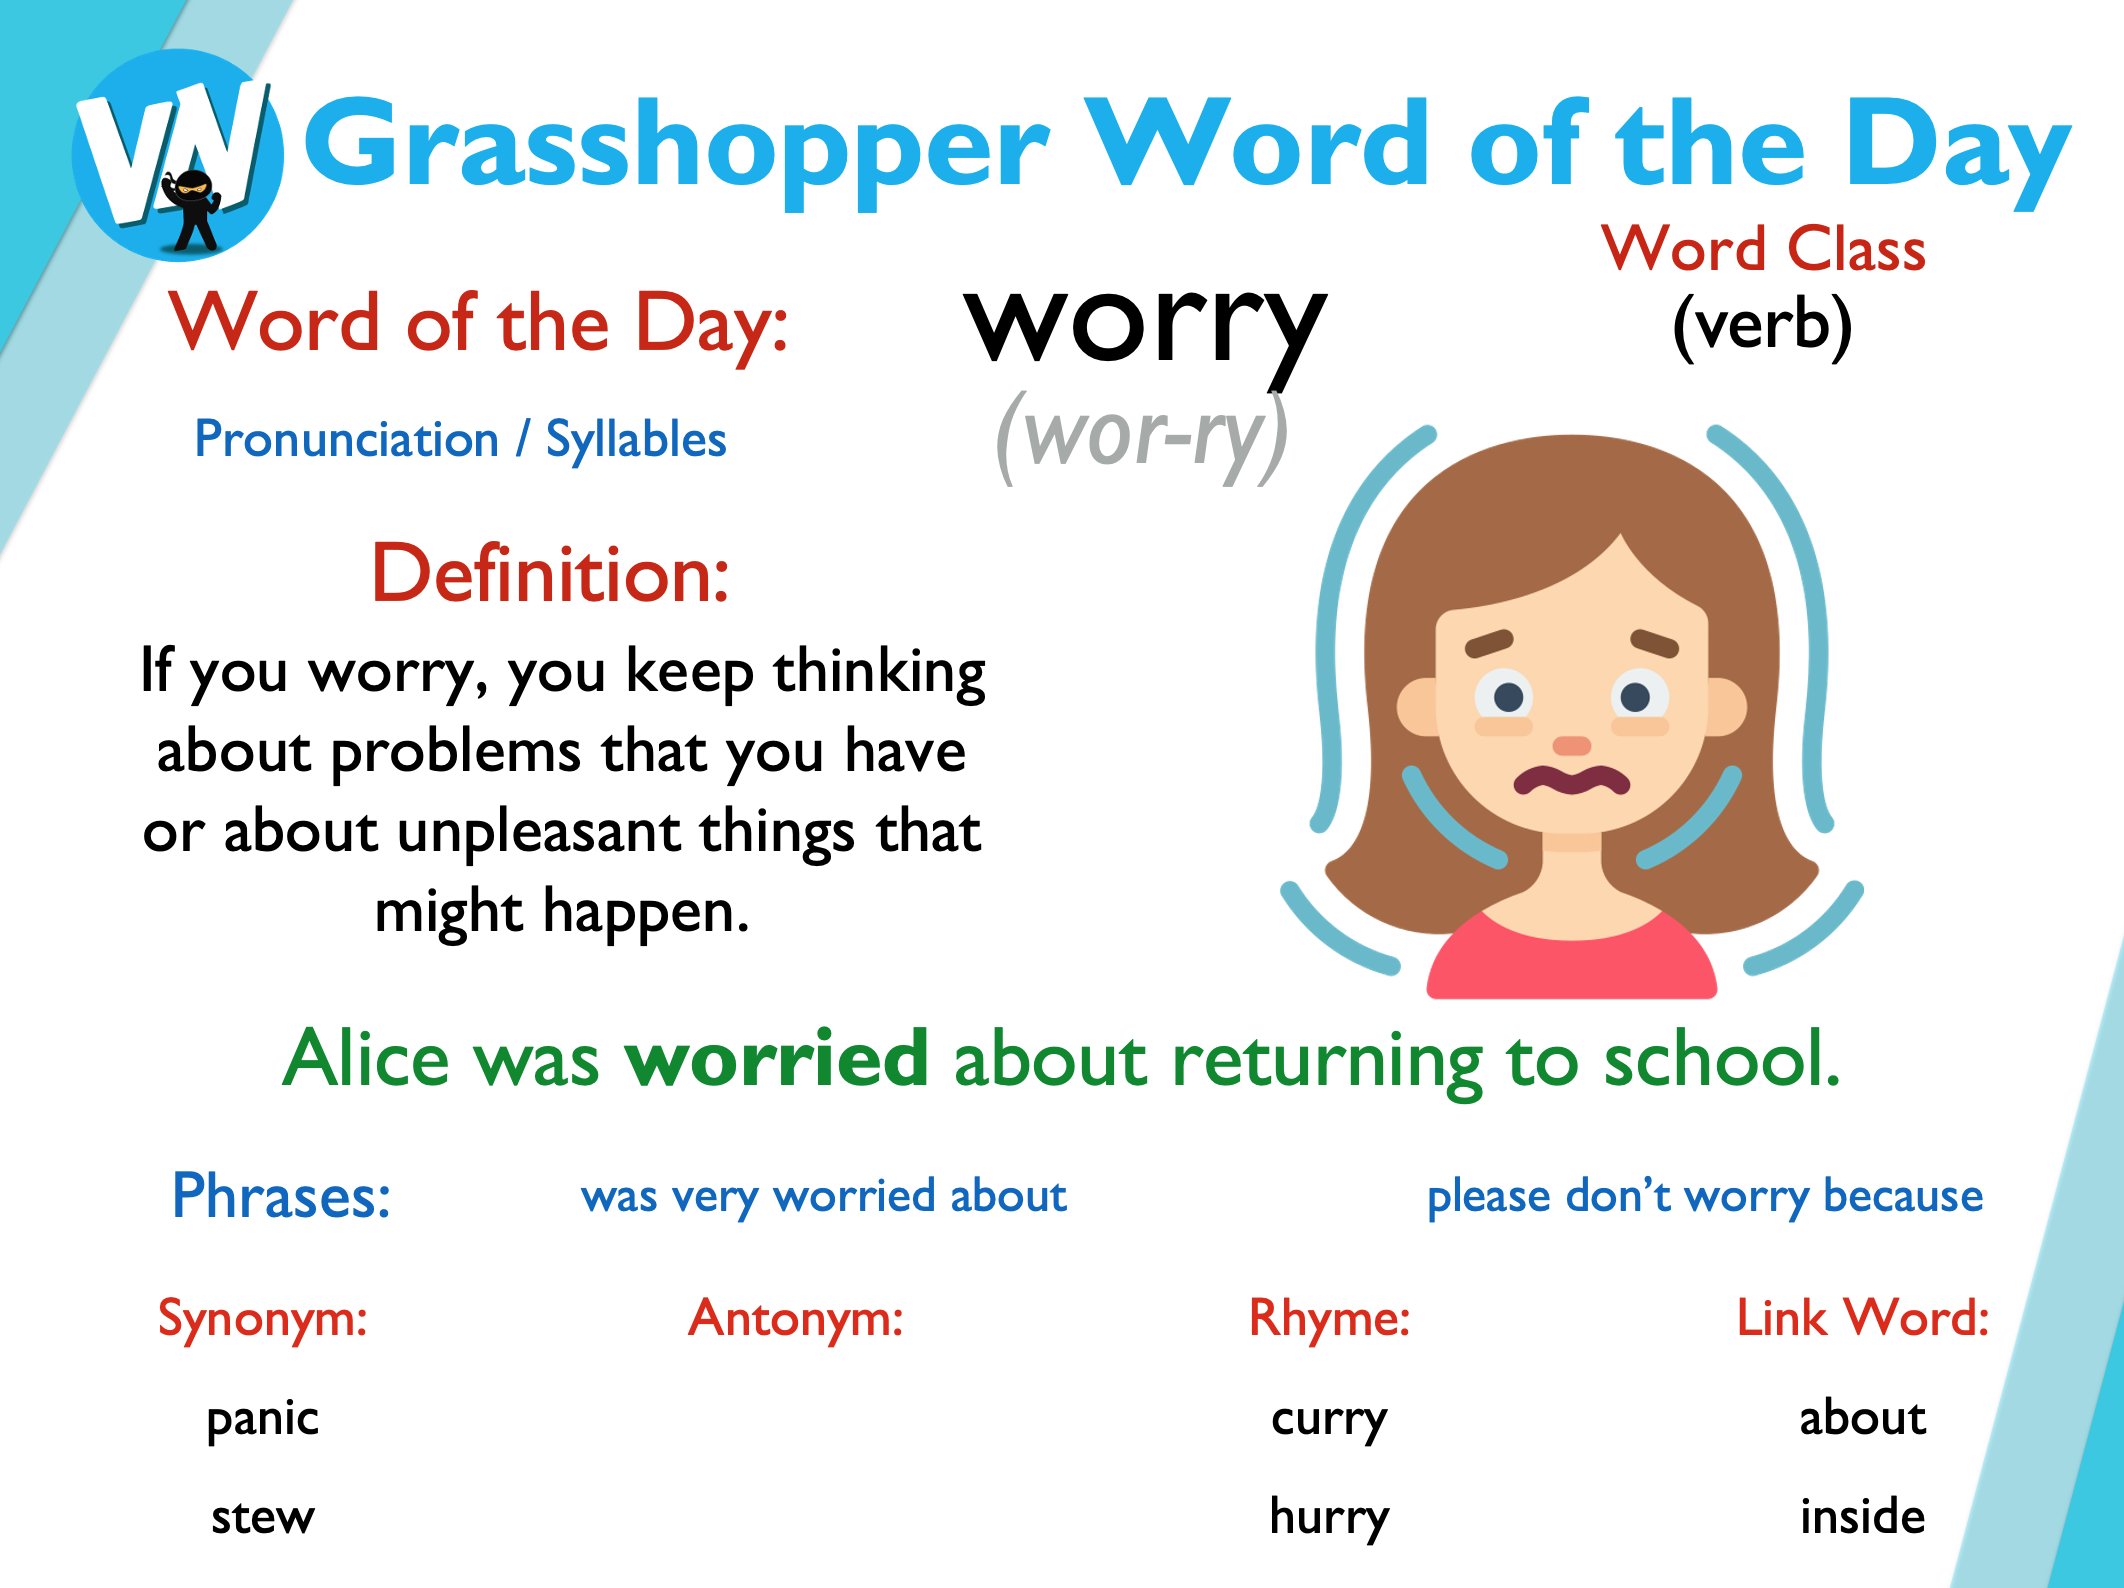 Vocabulary Ninja on X: Grasshopper Word of the Day    / X